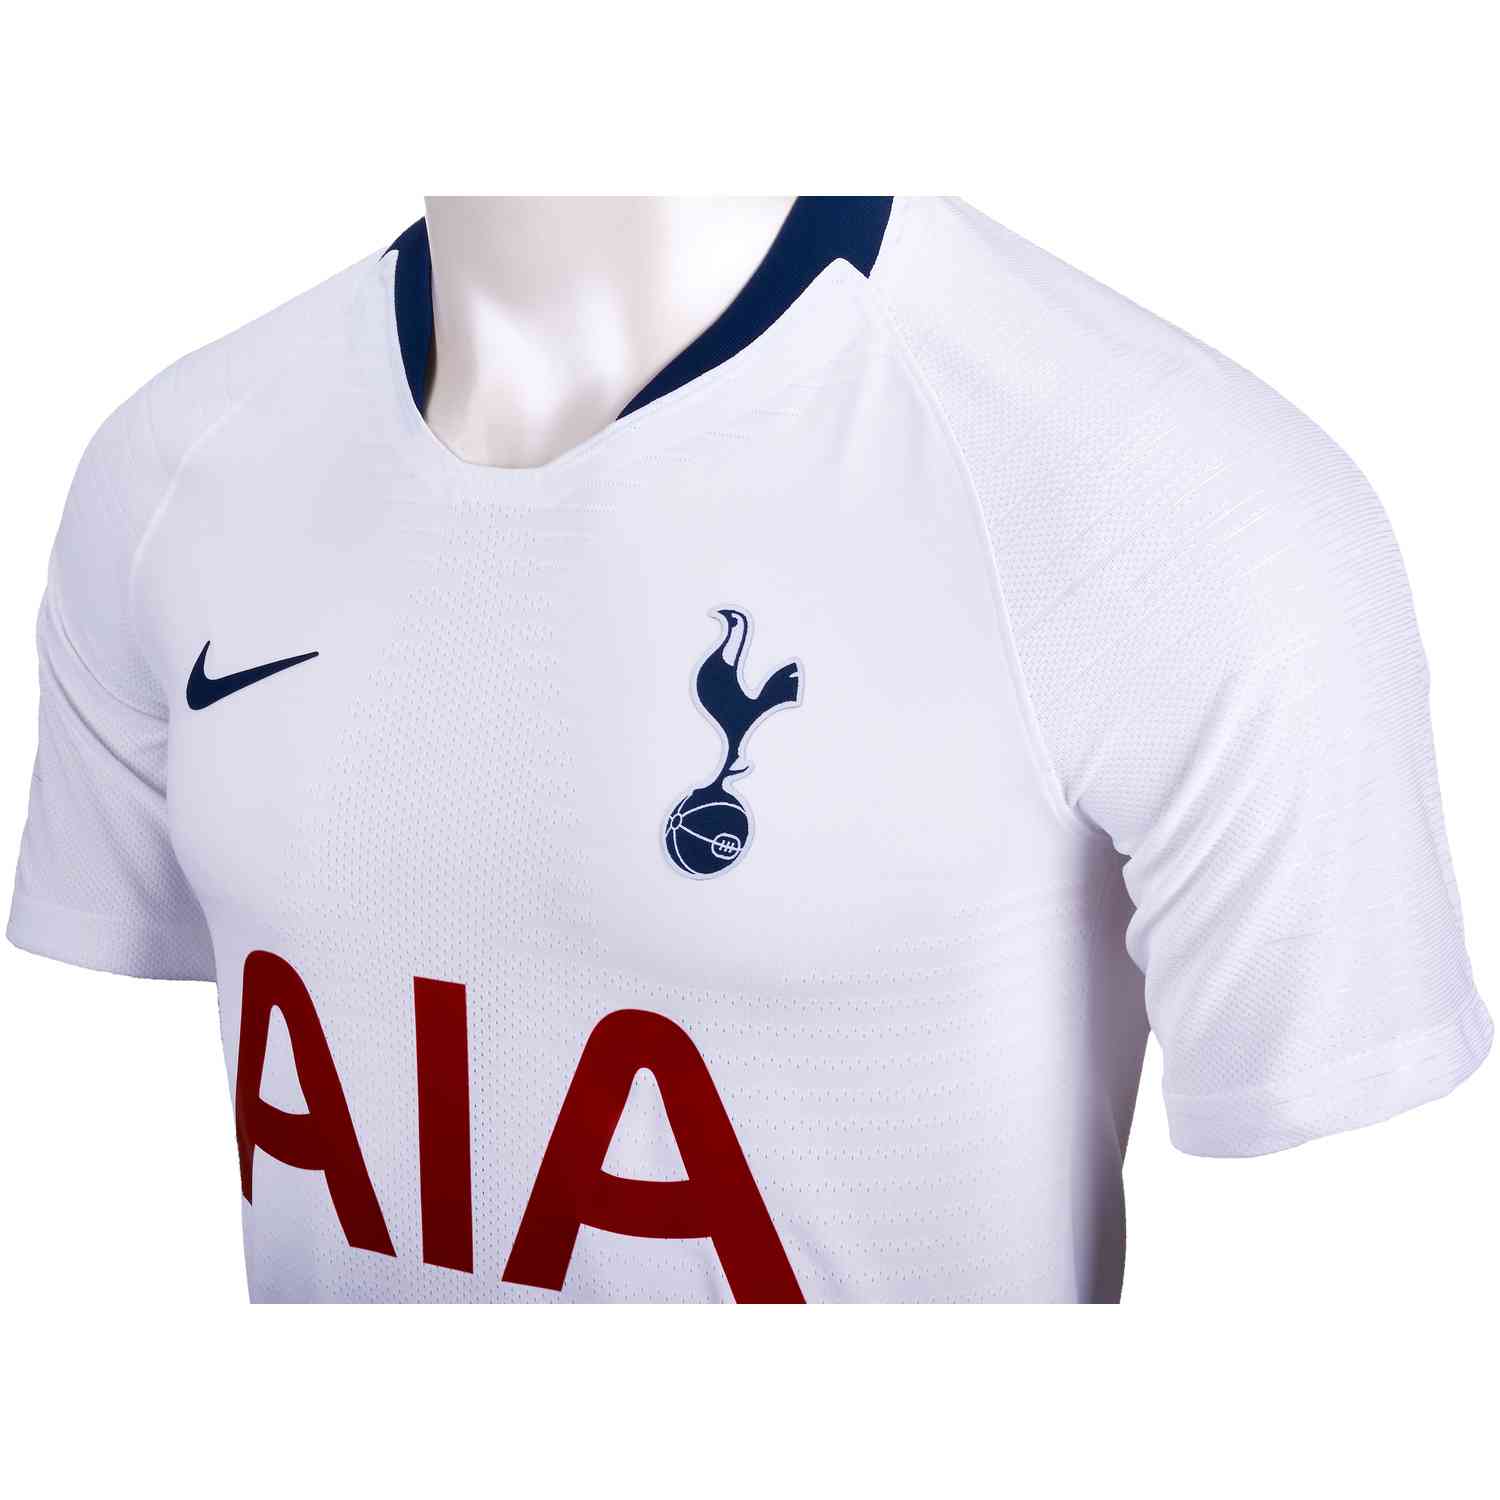 Nike Tottenham Hotspur 2018-19 Third Jersey - Review 